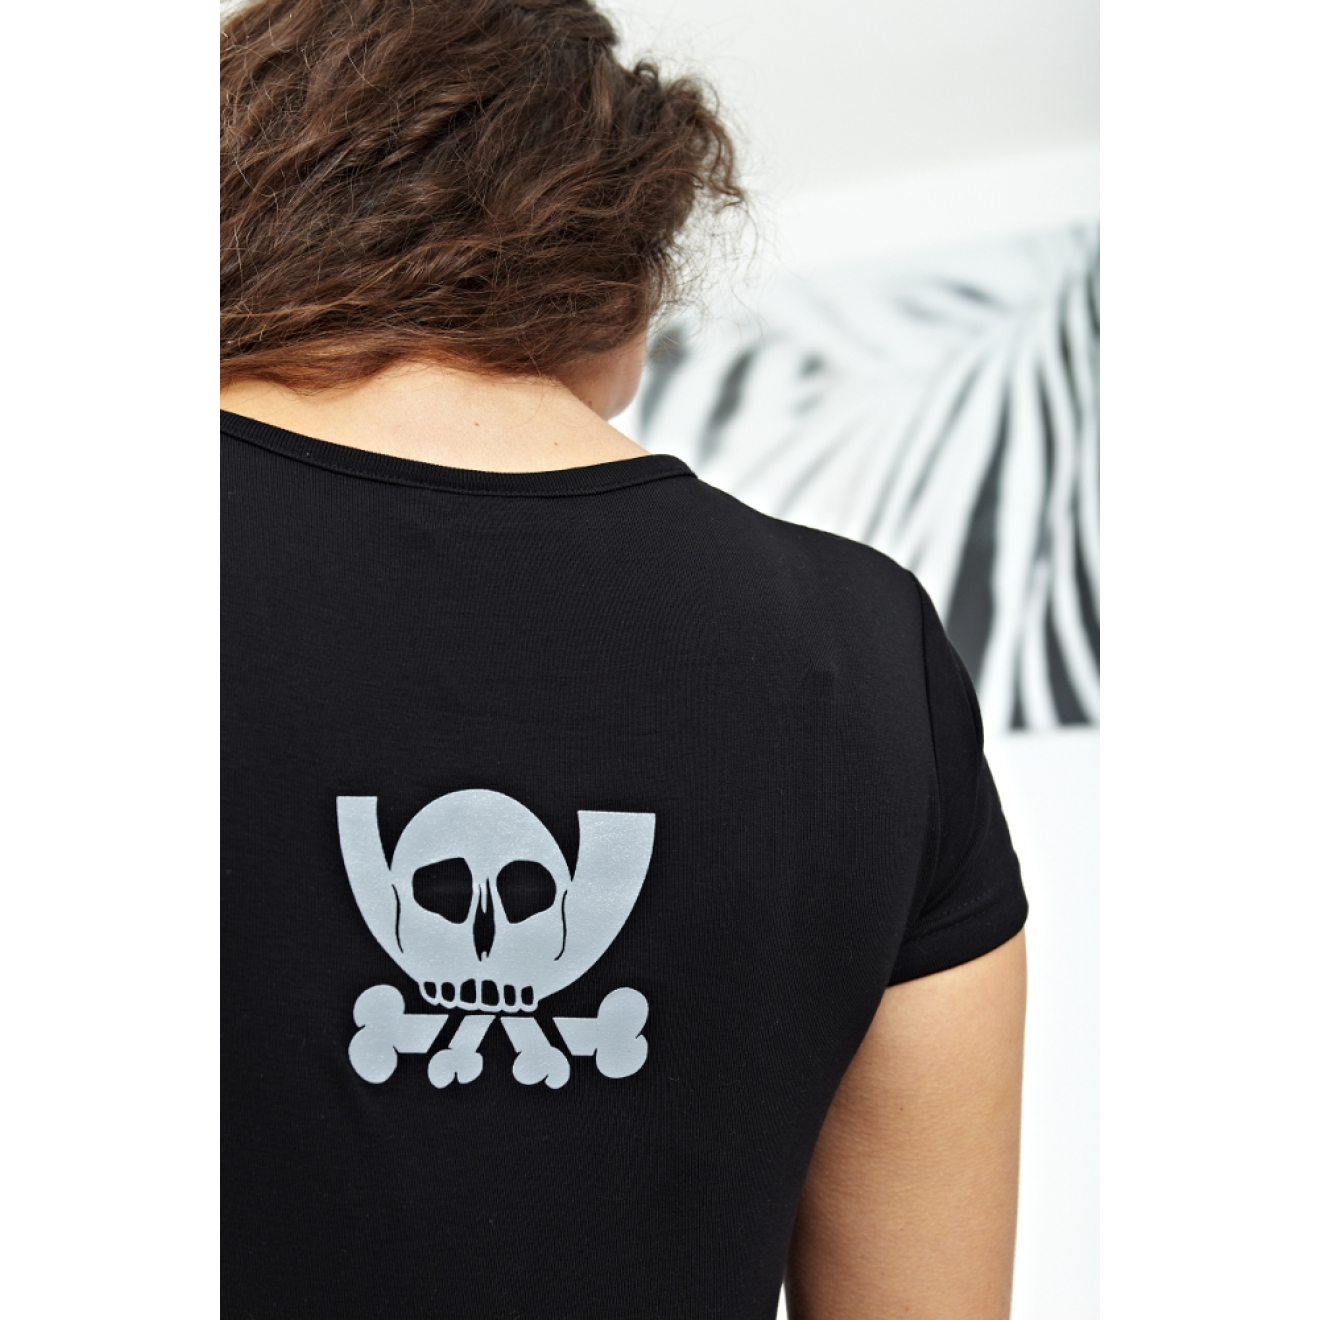 Girlie-Shirt: Pesthörnchen / Datenpiraten (schwarz)